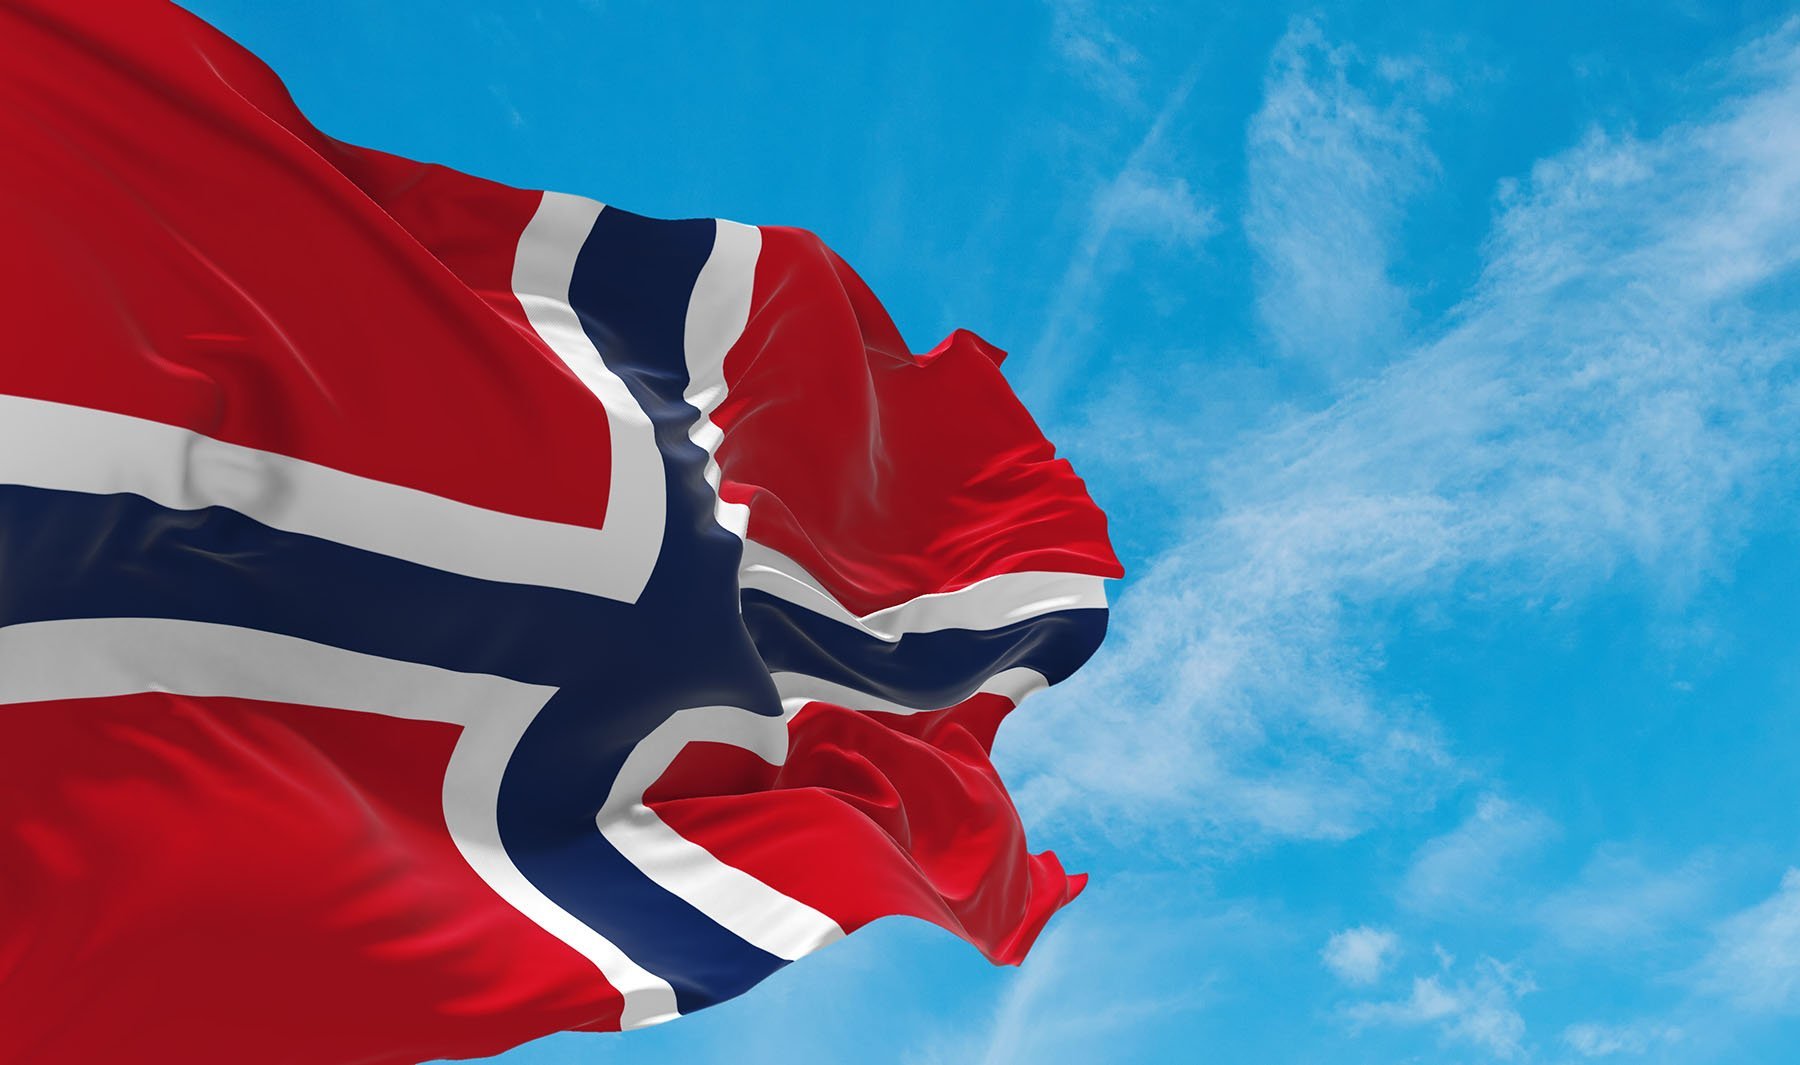 Norway flag against blue sky